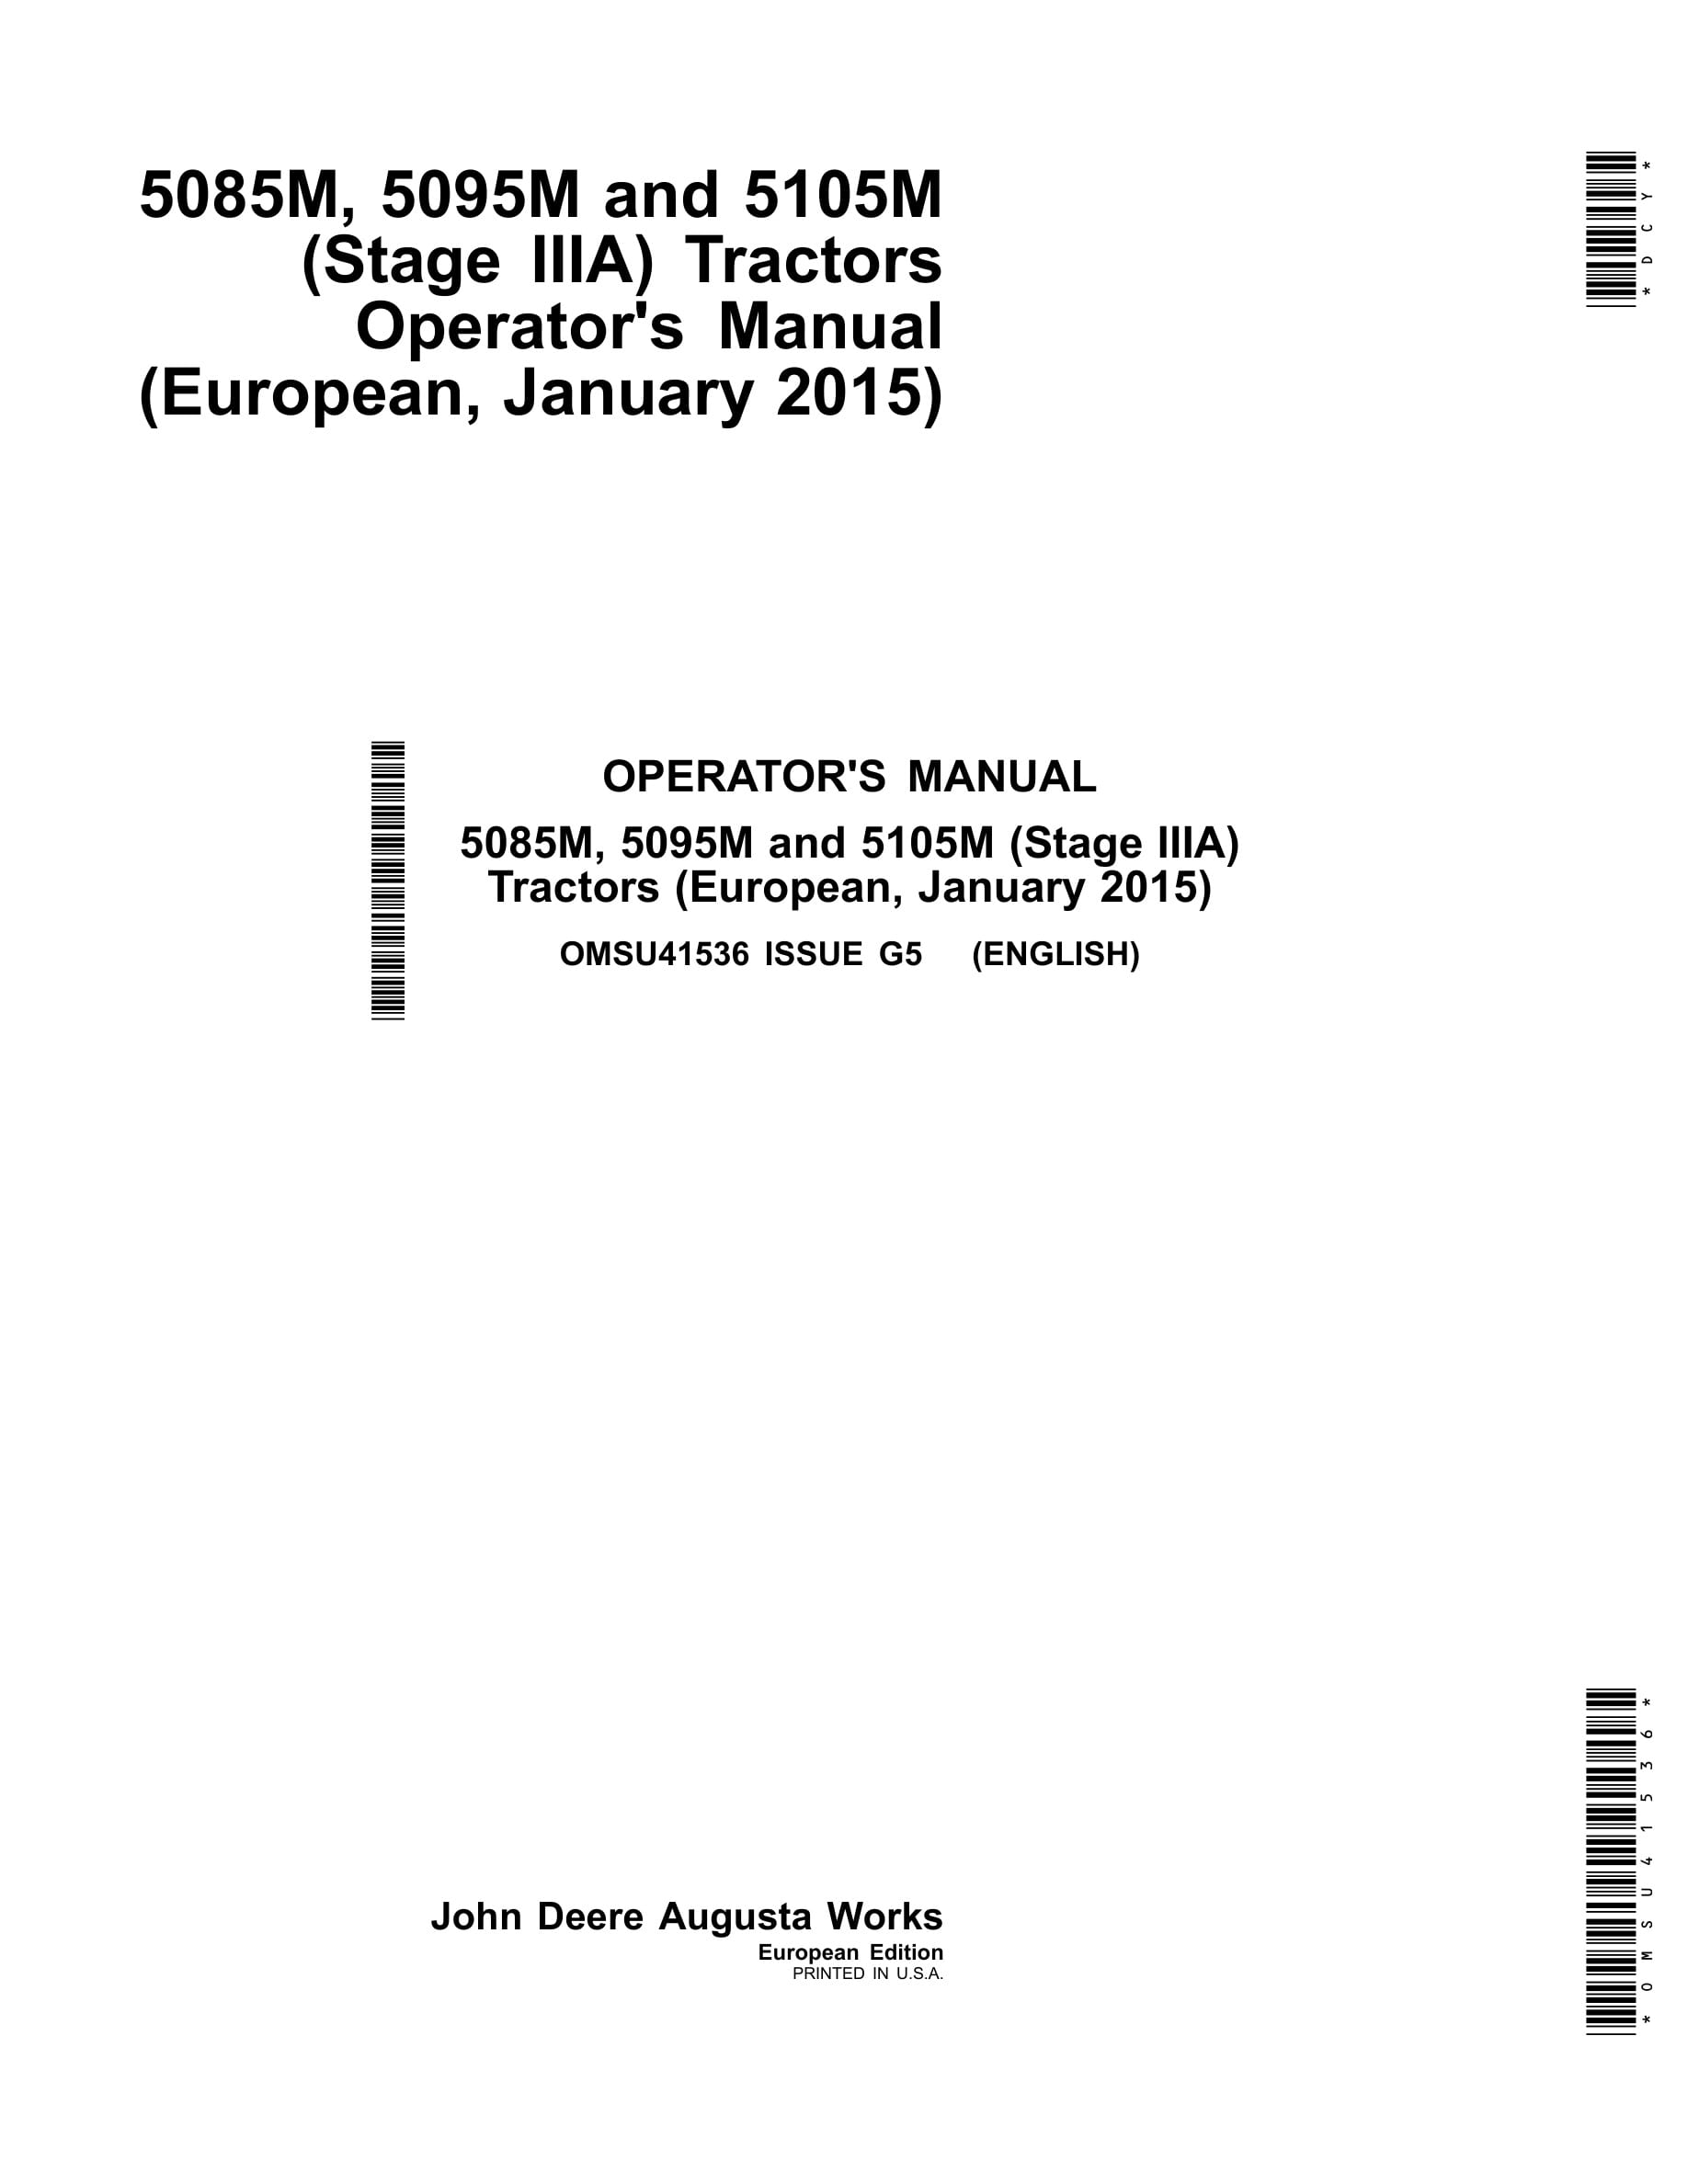 John Deere 5085m, 5095m And 5105m (stage Iiia) Tractors Operator Manuals OMSU41536-1